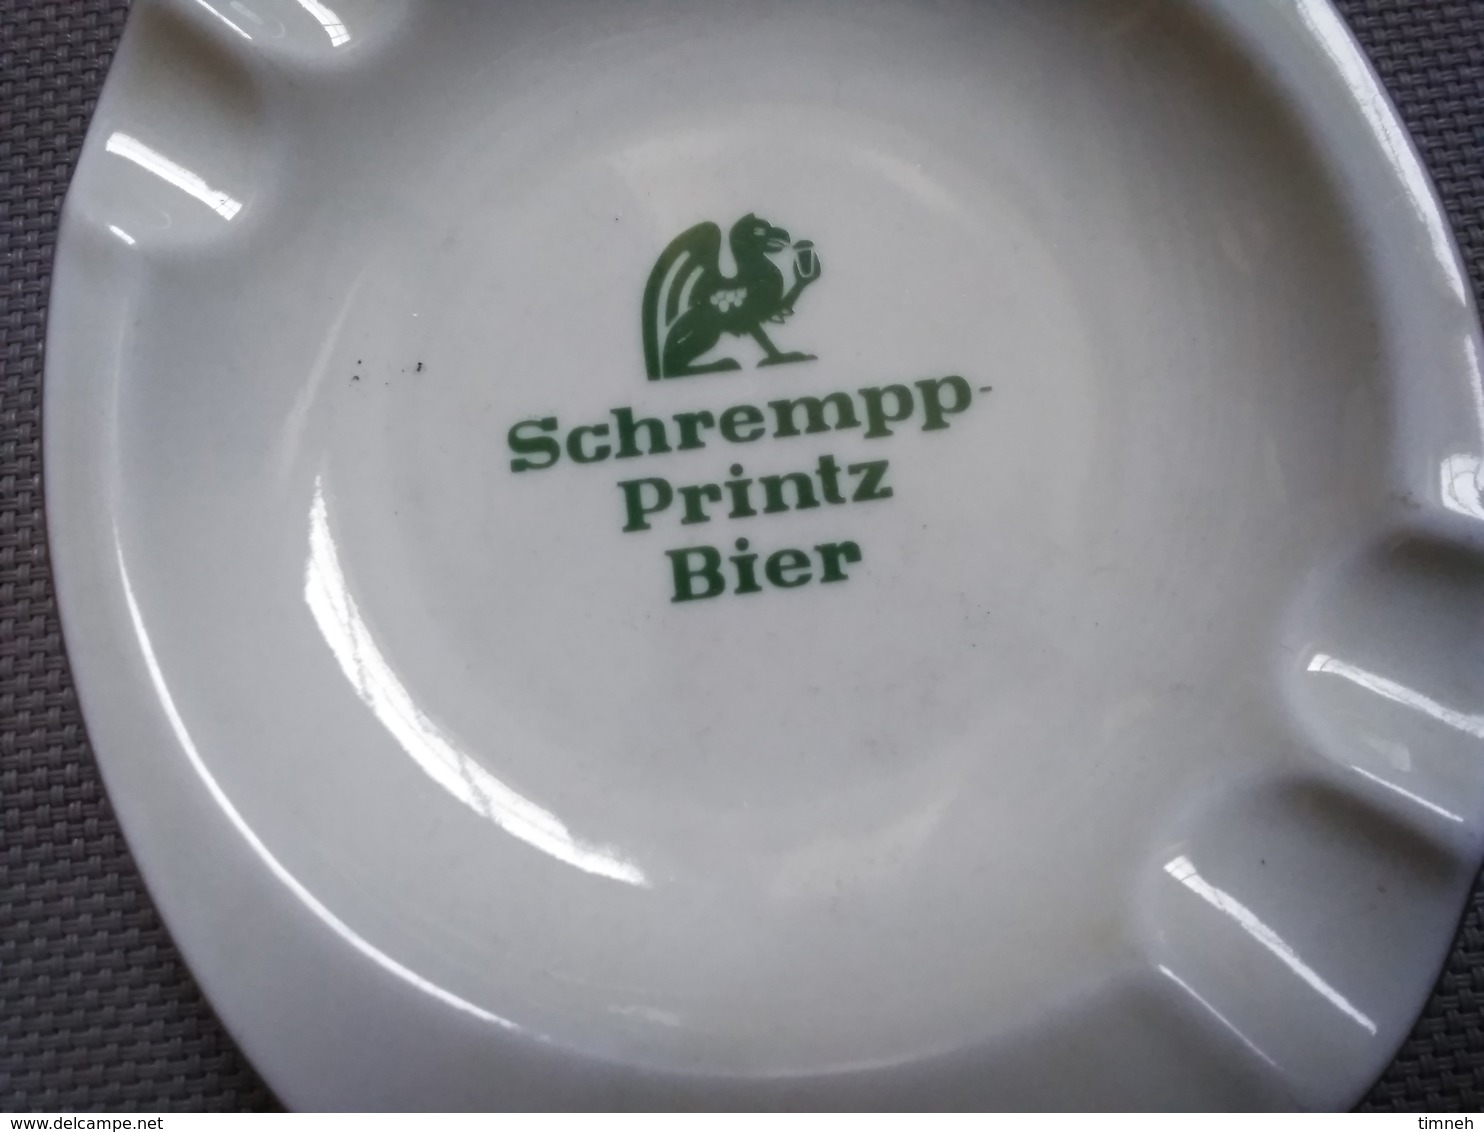 FAÏENCE EMIL SAHM PLANKENHAMMER FLOSS BAVARIA GERMANY - SCHREMPP PRINTZ BIER - CENDRIER 15x12cm - FAÏENCE - Portacenere